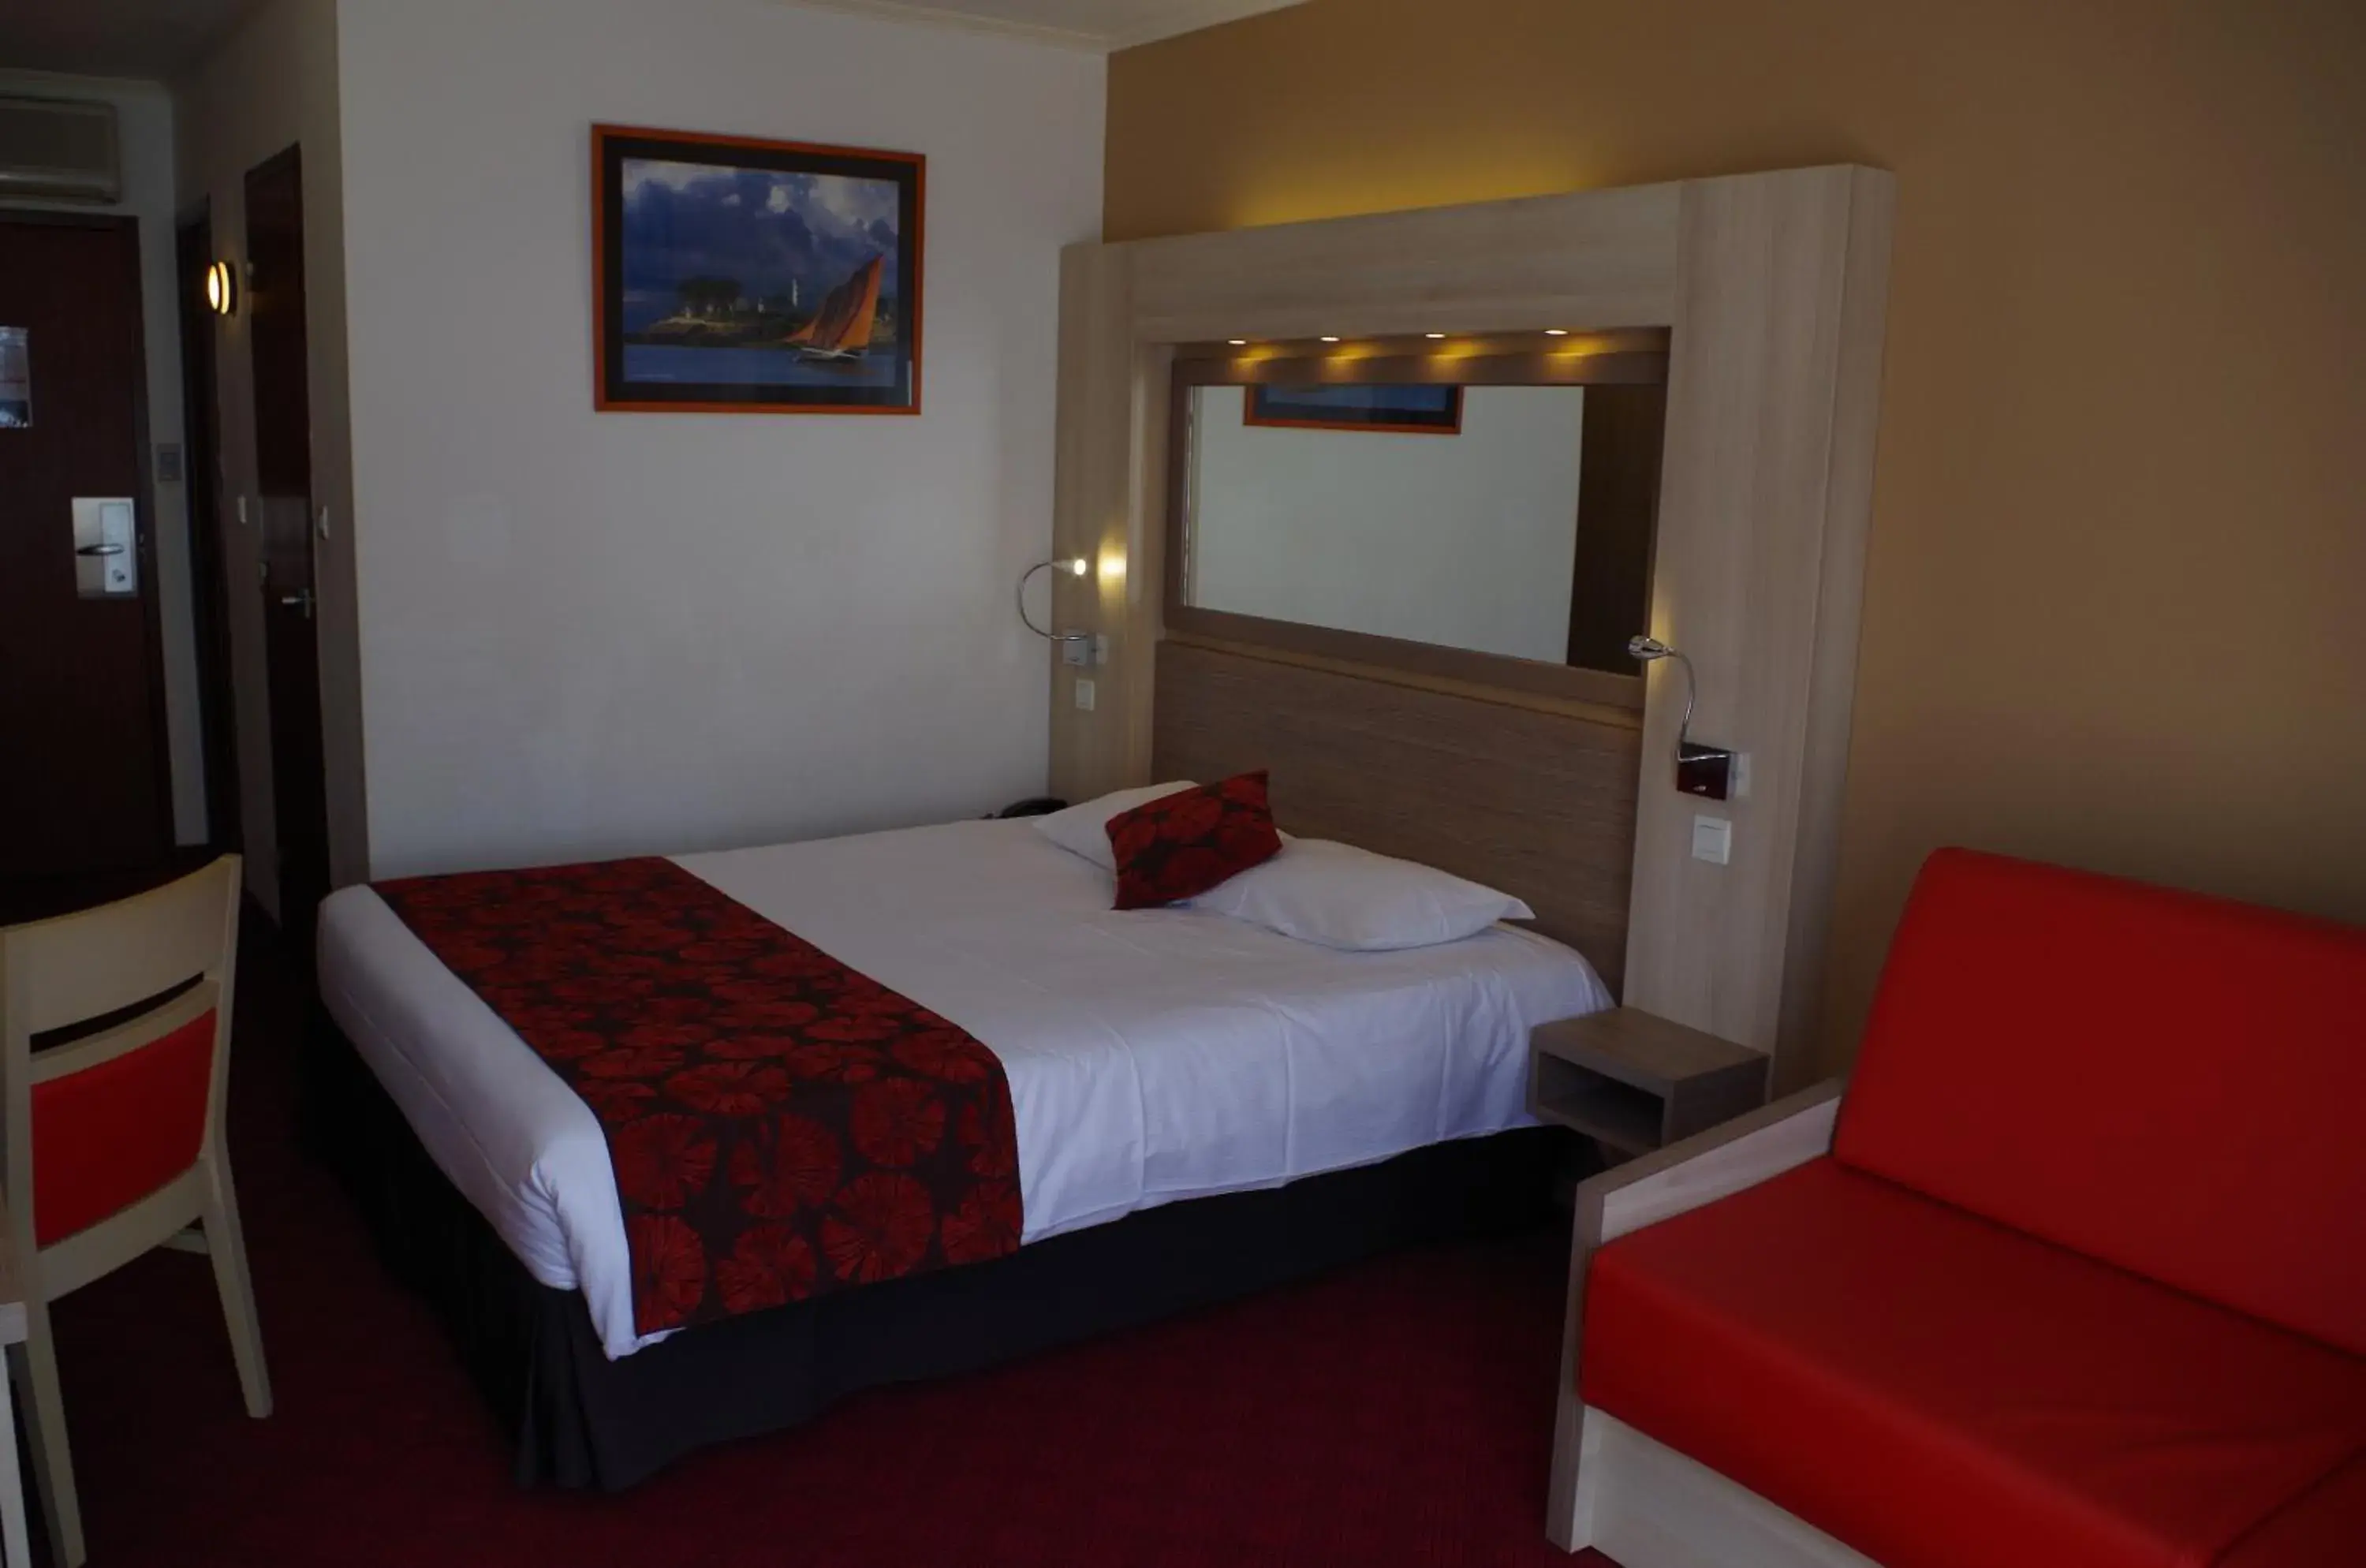 Bed, Room Photo in The Originals Boutique, Hotel Aquilon, Saint-Nazaire (Inter-Hotel)